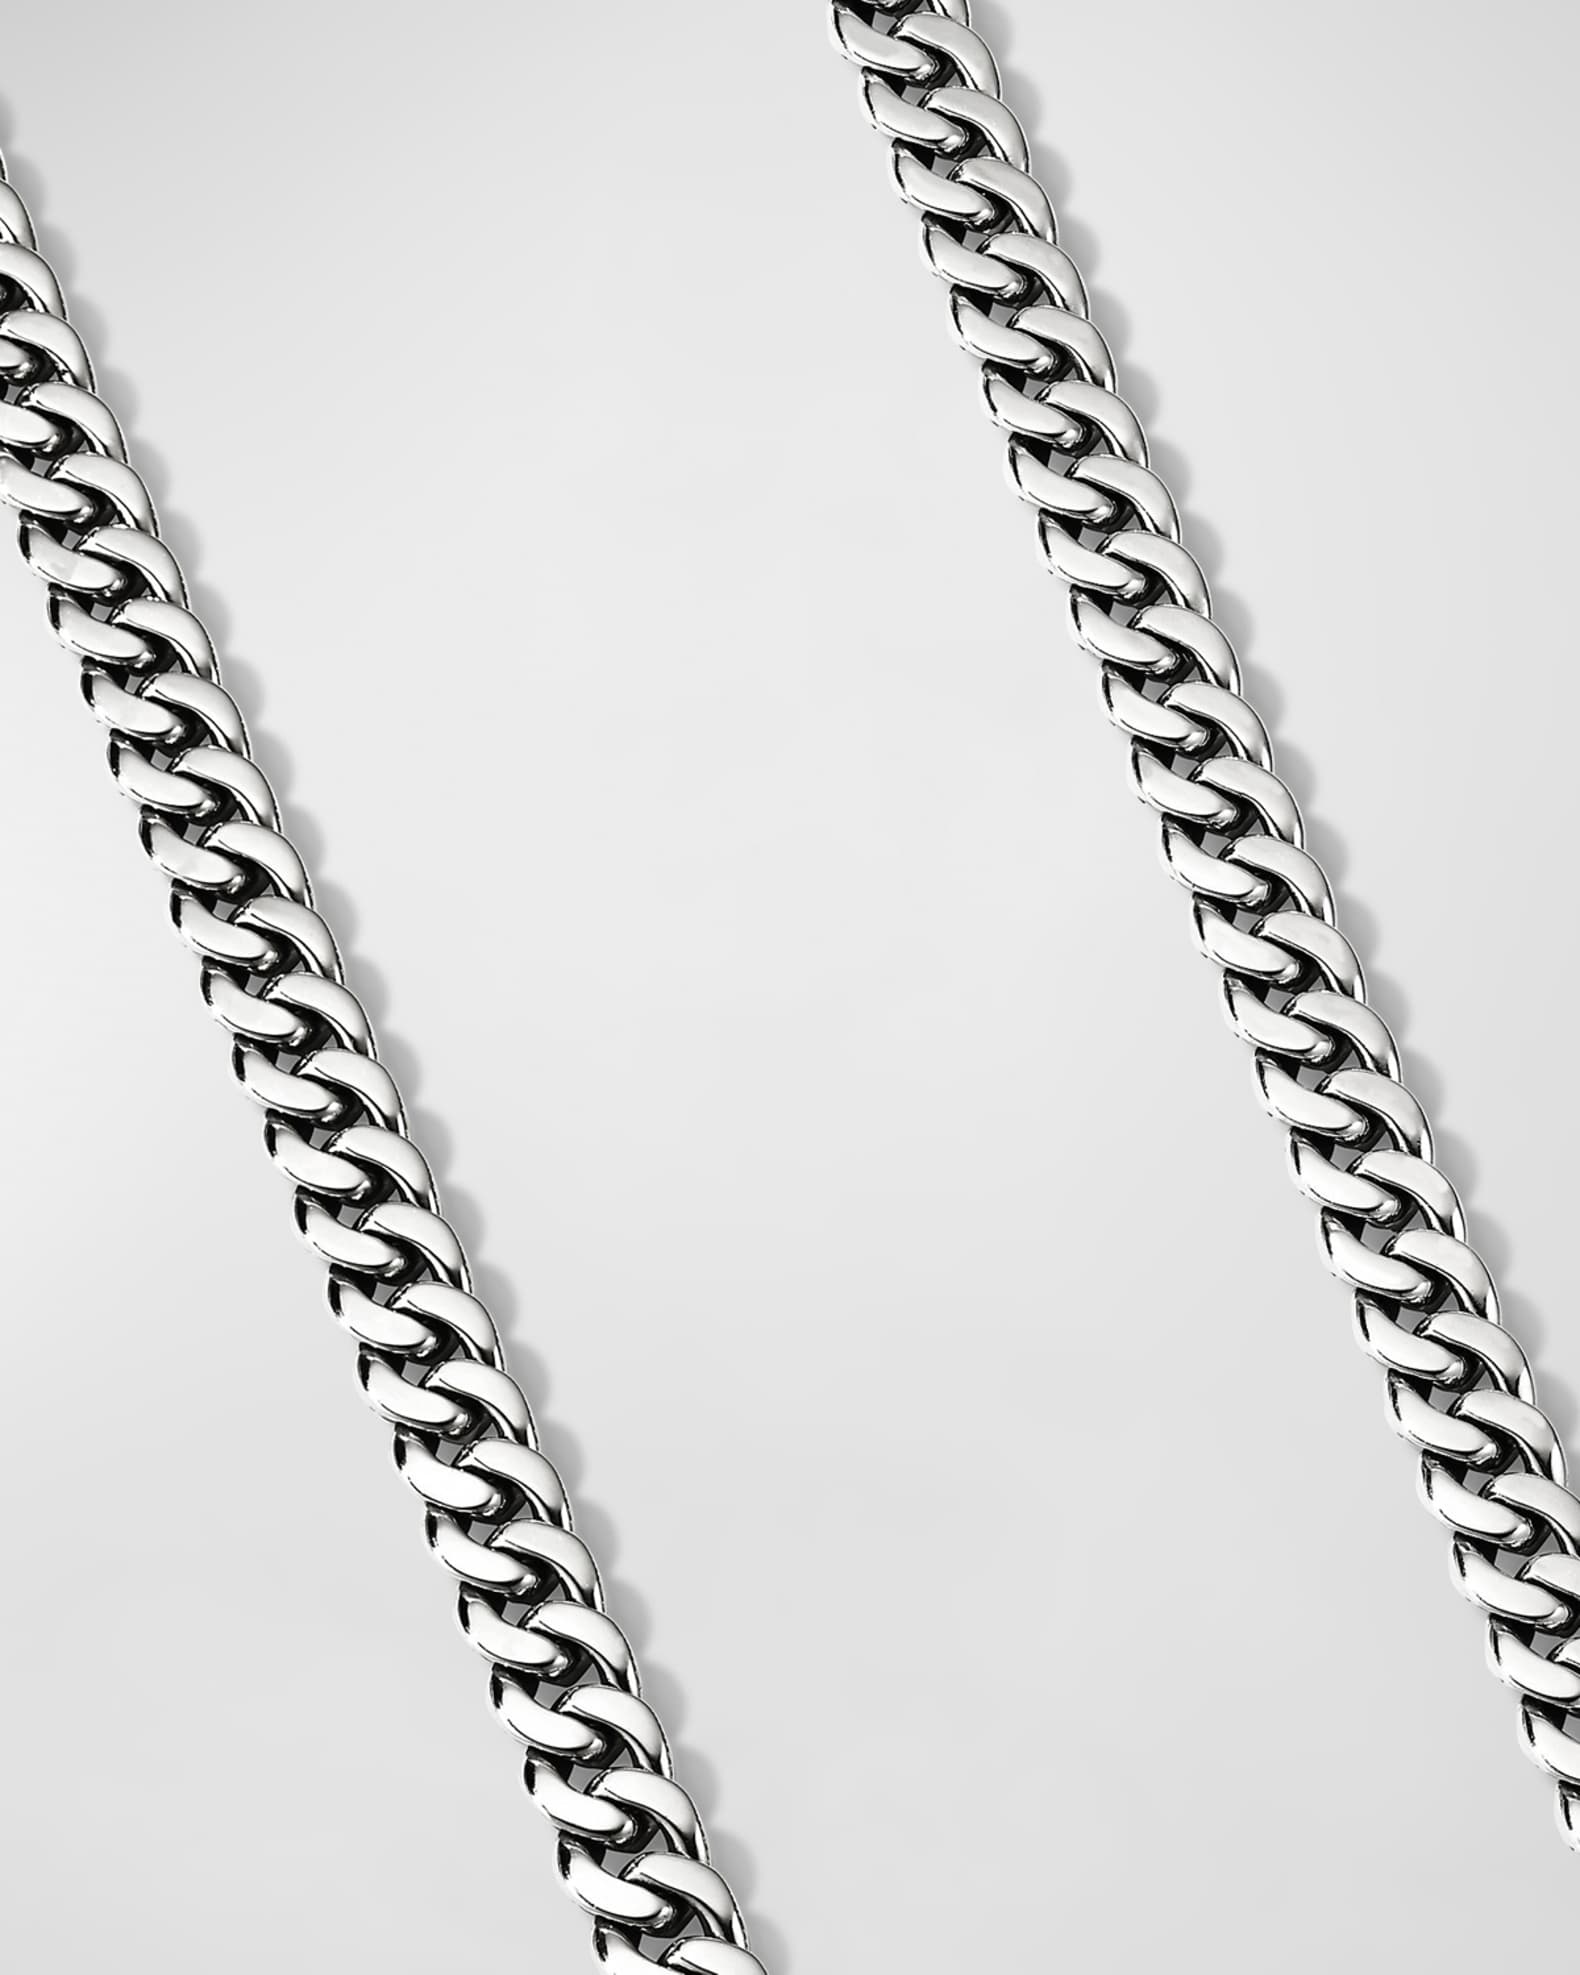 David Yurman Men's Curb Chain Necklace in Silver, 8mm, 24